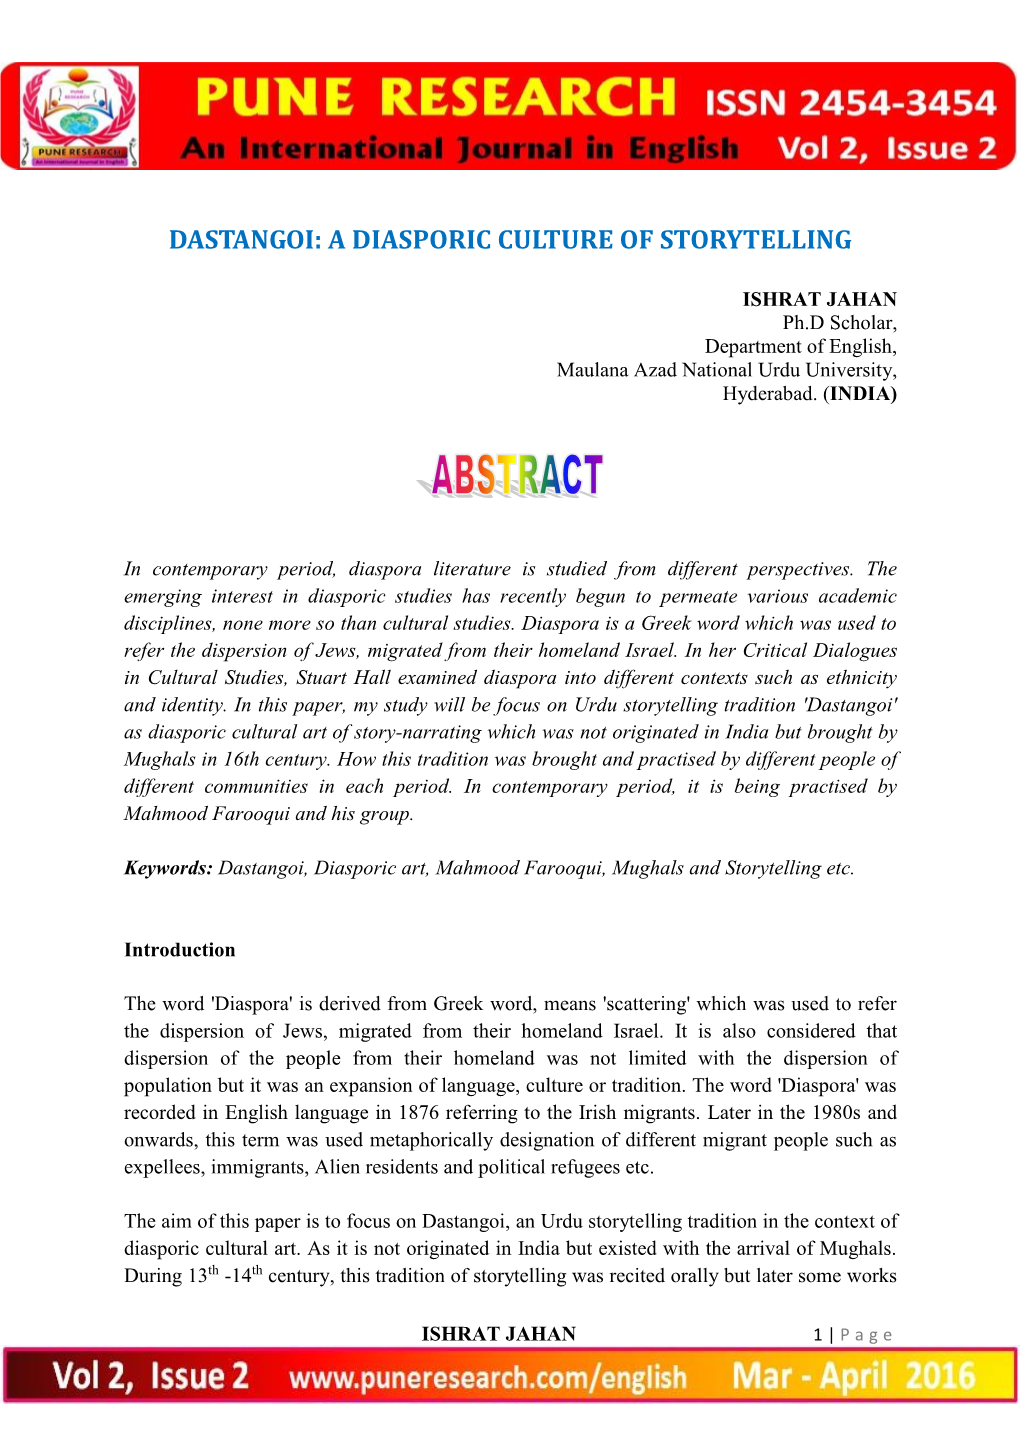 Dastangoi: a Diasporic Culture of Storytelling